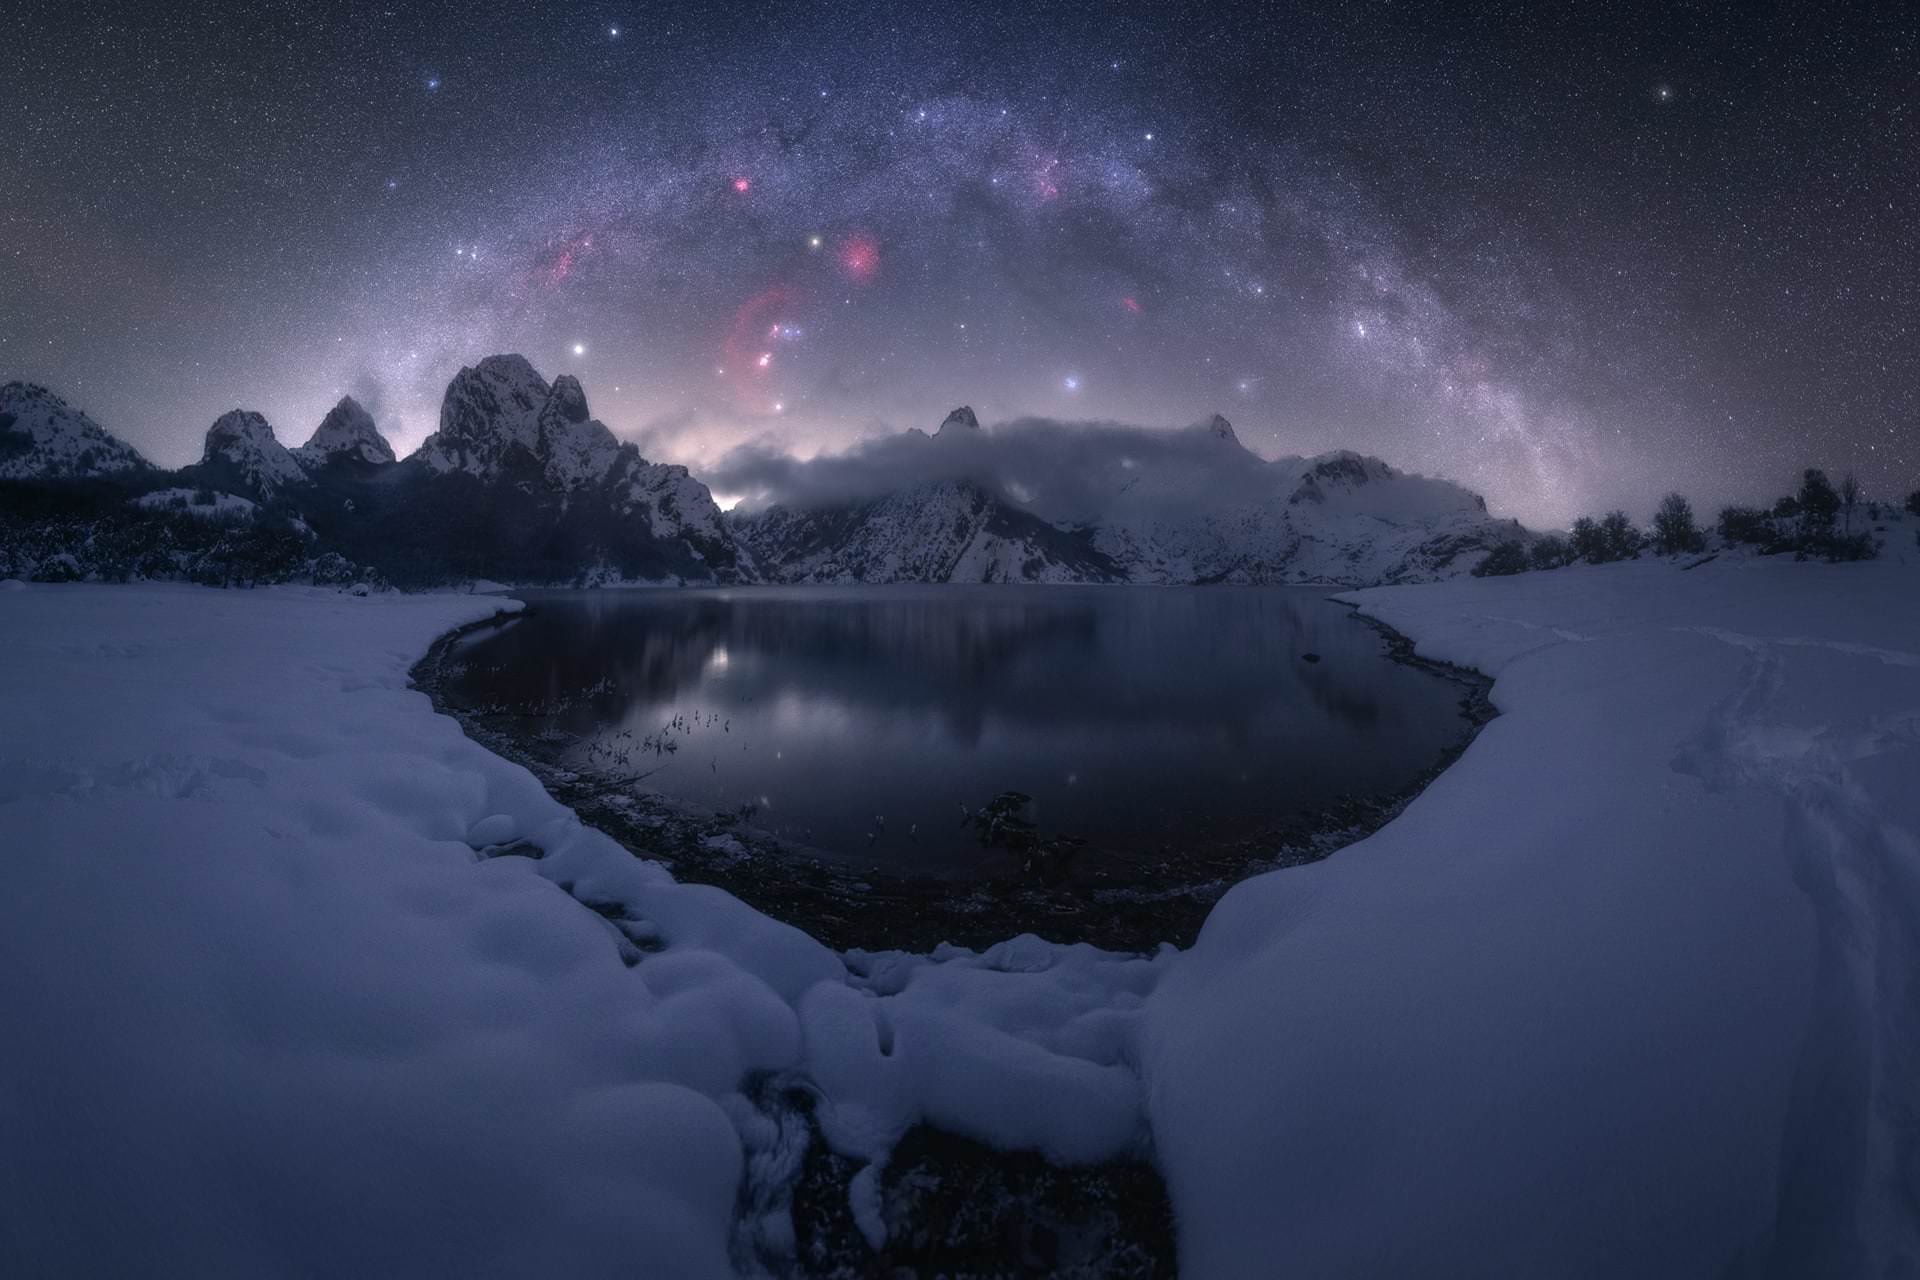 Riaño / Pablo Ruiz / Spain / Milky Way Photographer of the Year 2021